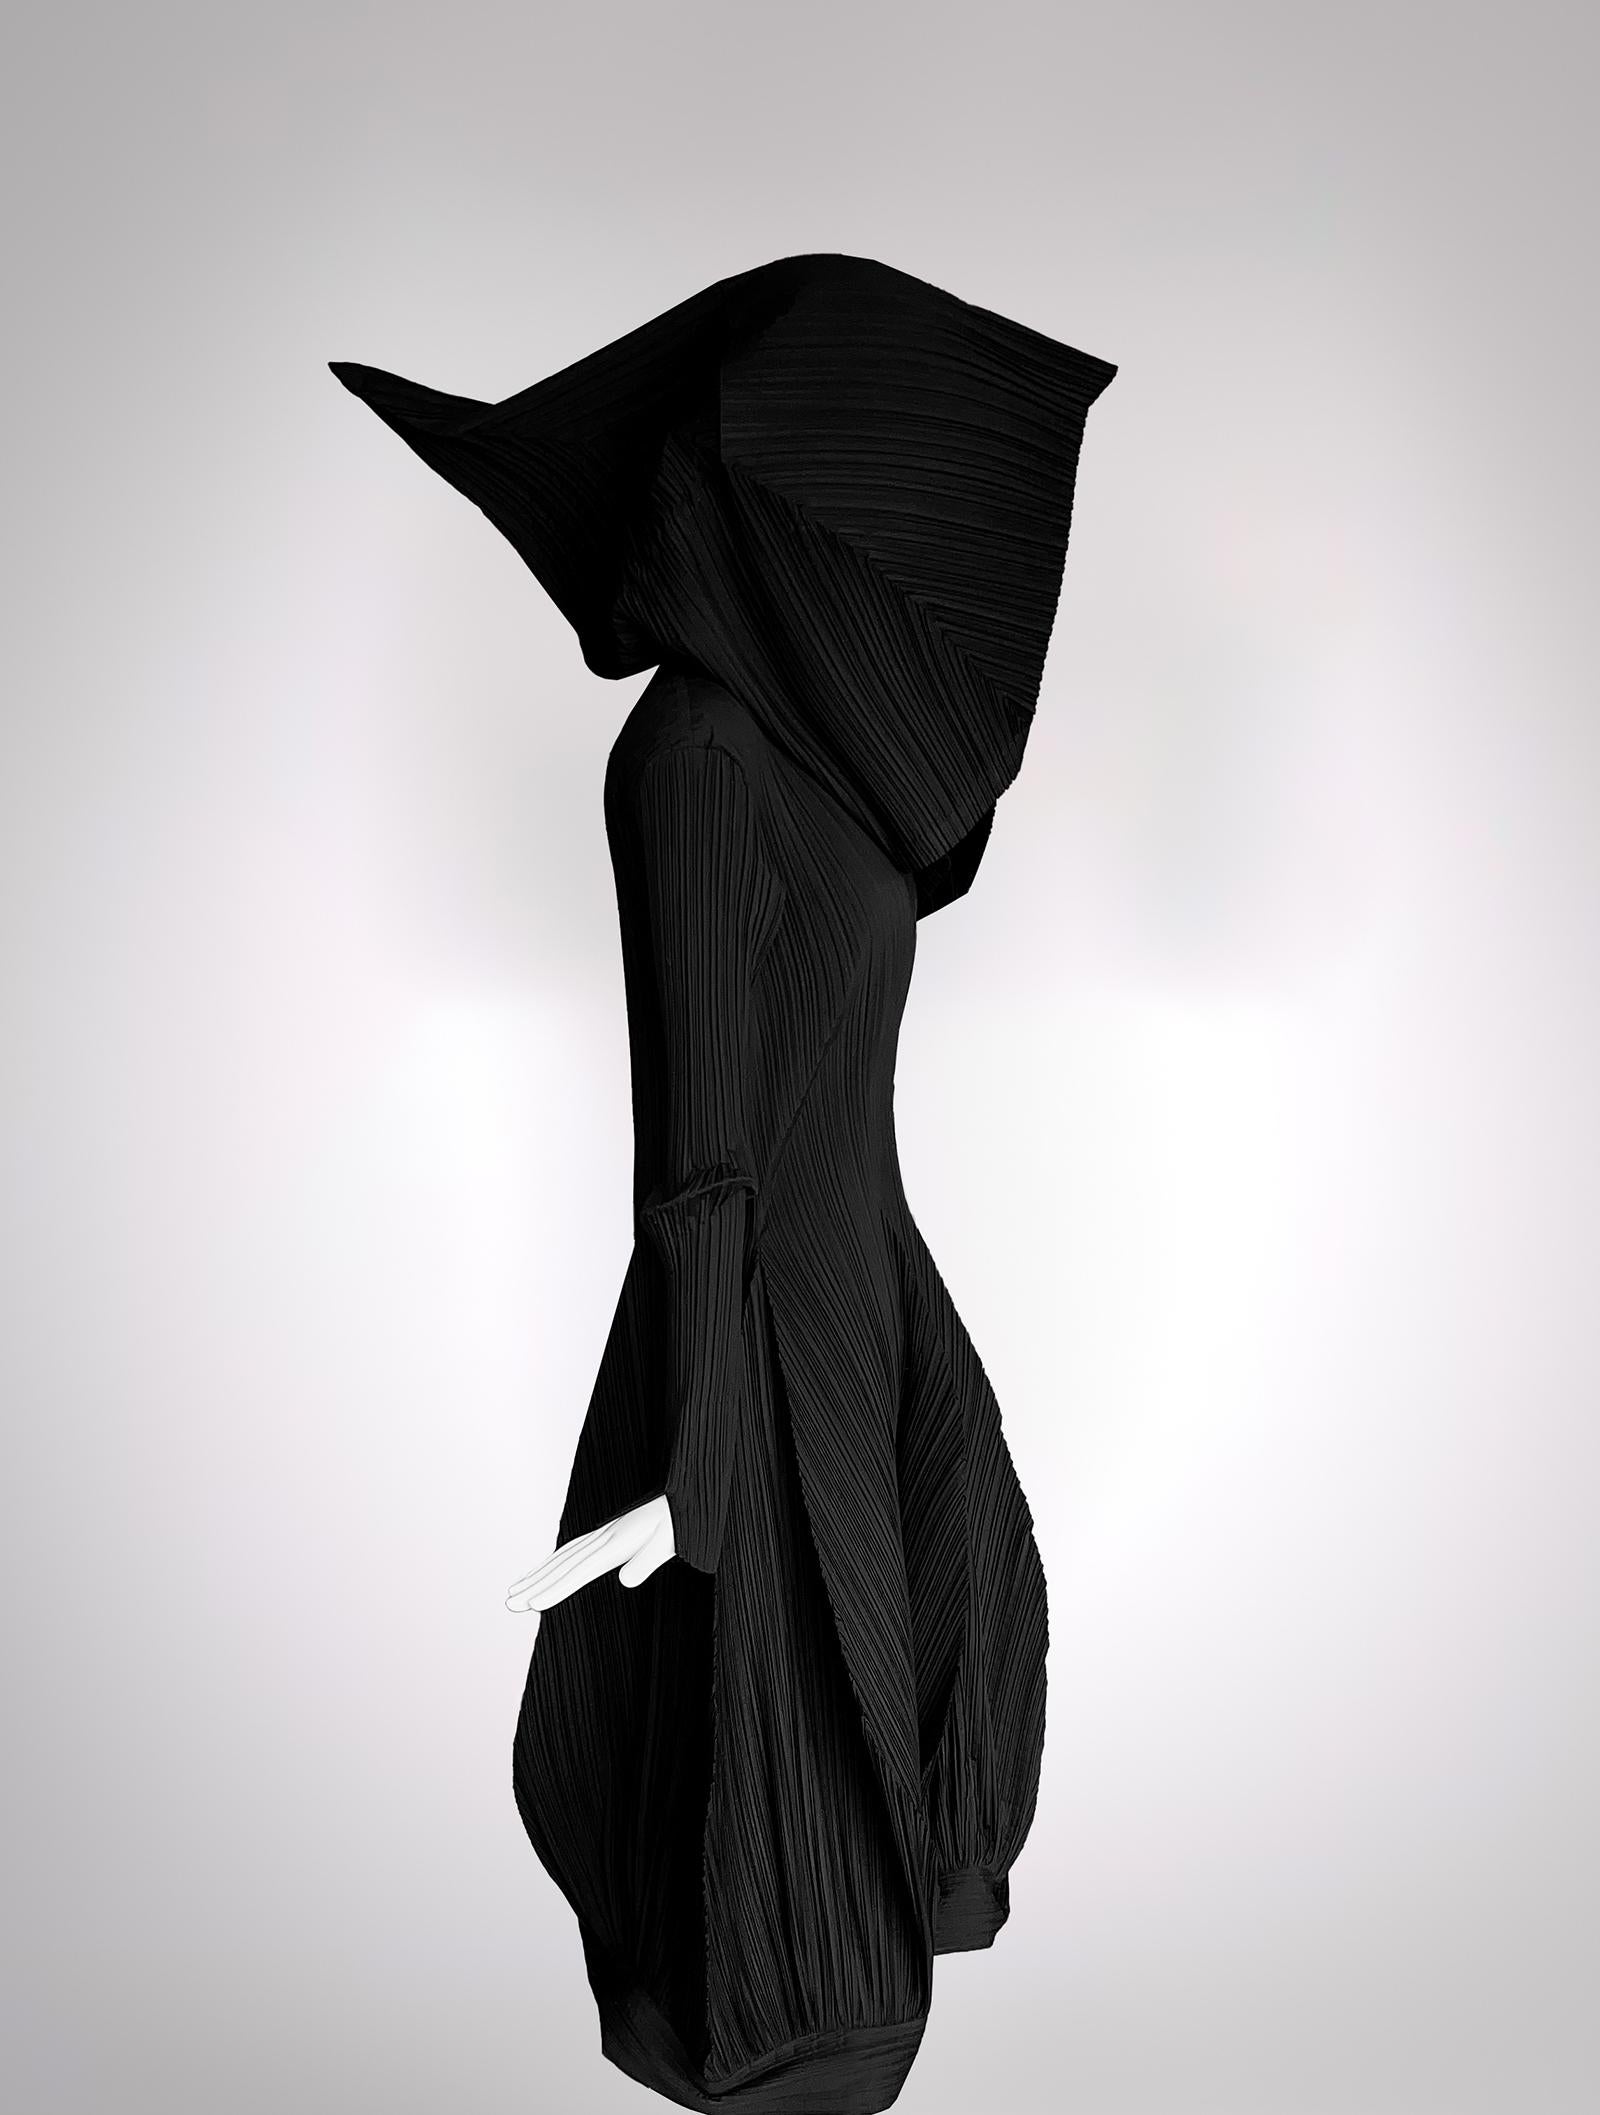 Iconic ISSEY MIYAKE Tulip Dress Black Sculptural Editorial Dramatic 2